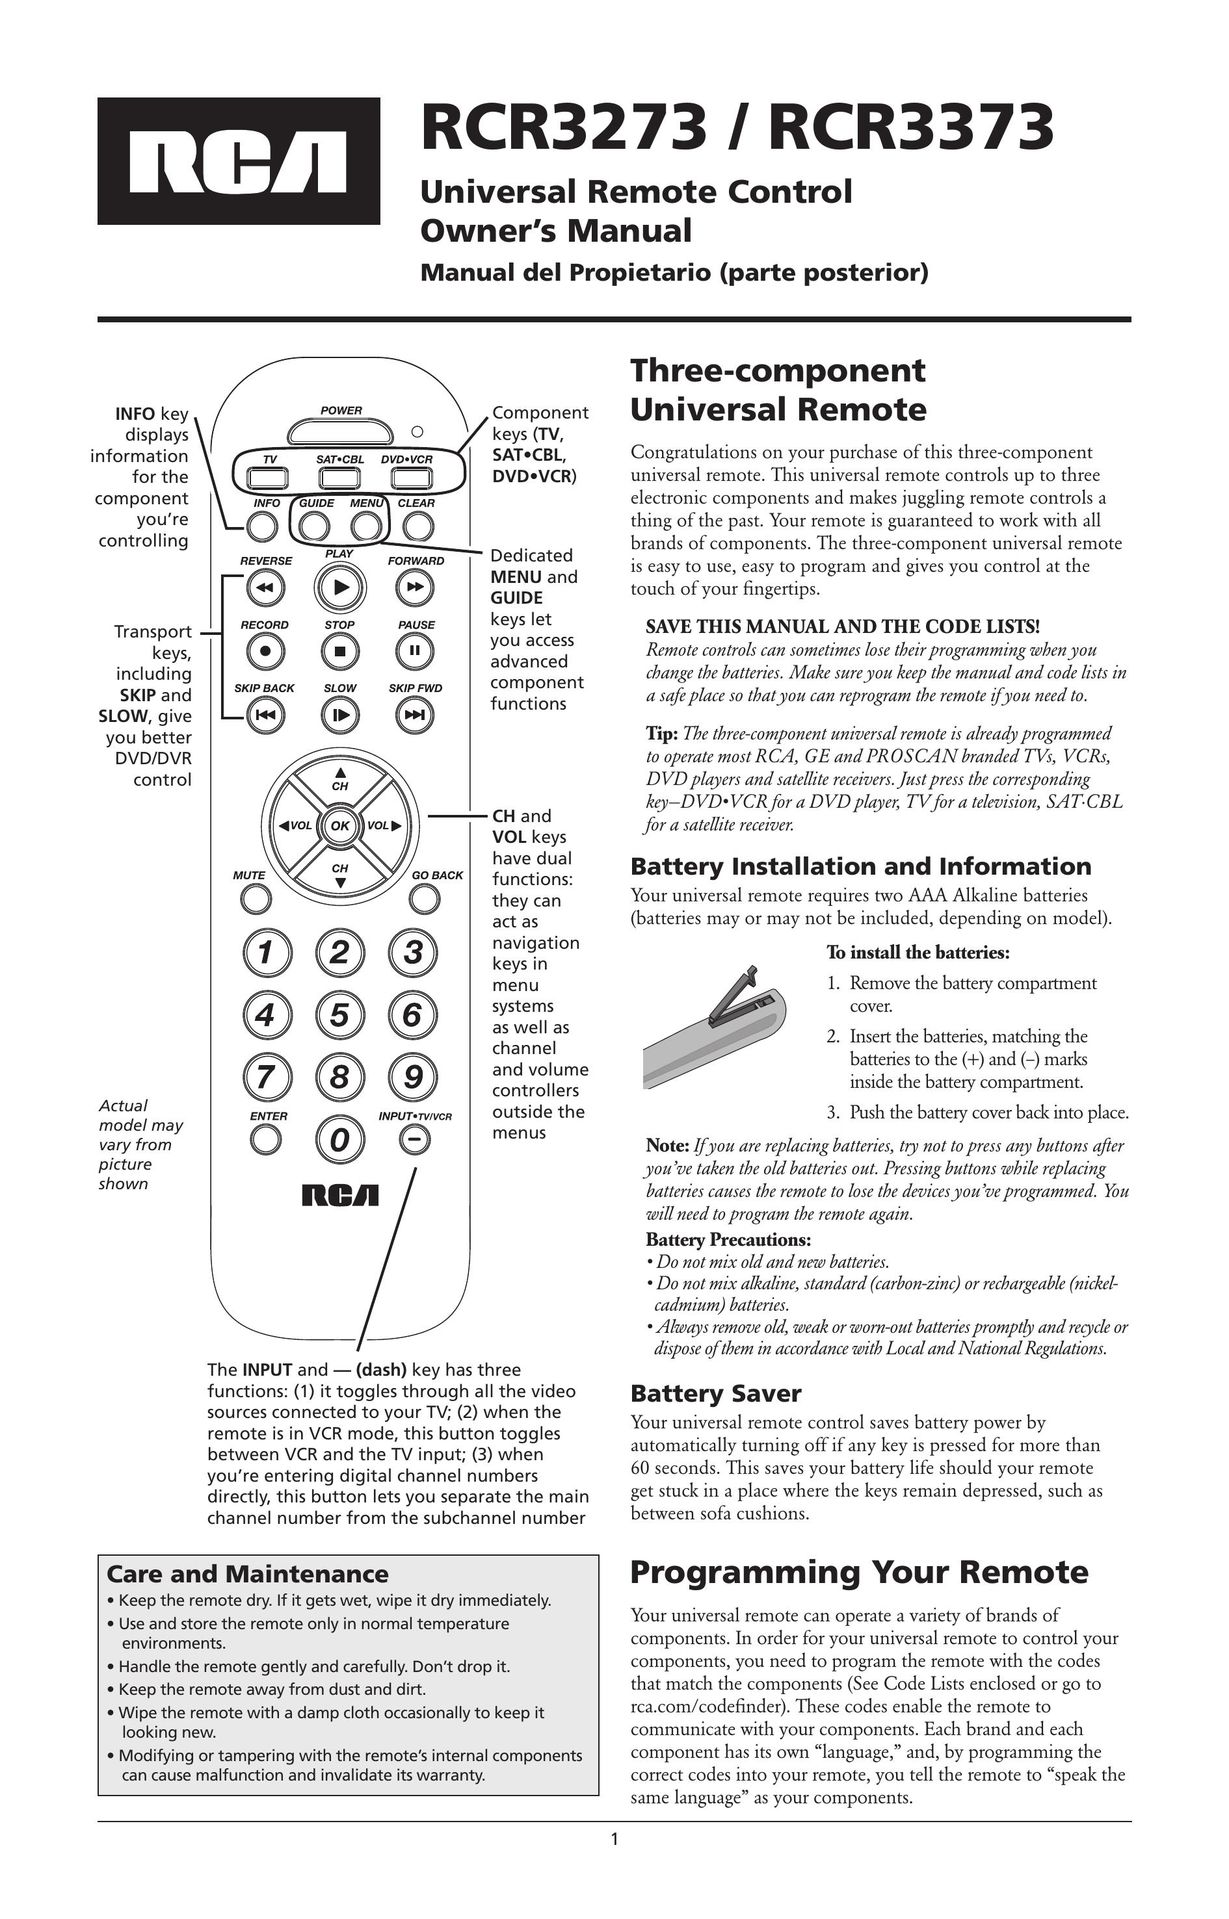 RCA RCR3373 Universal Remote User Manual